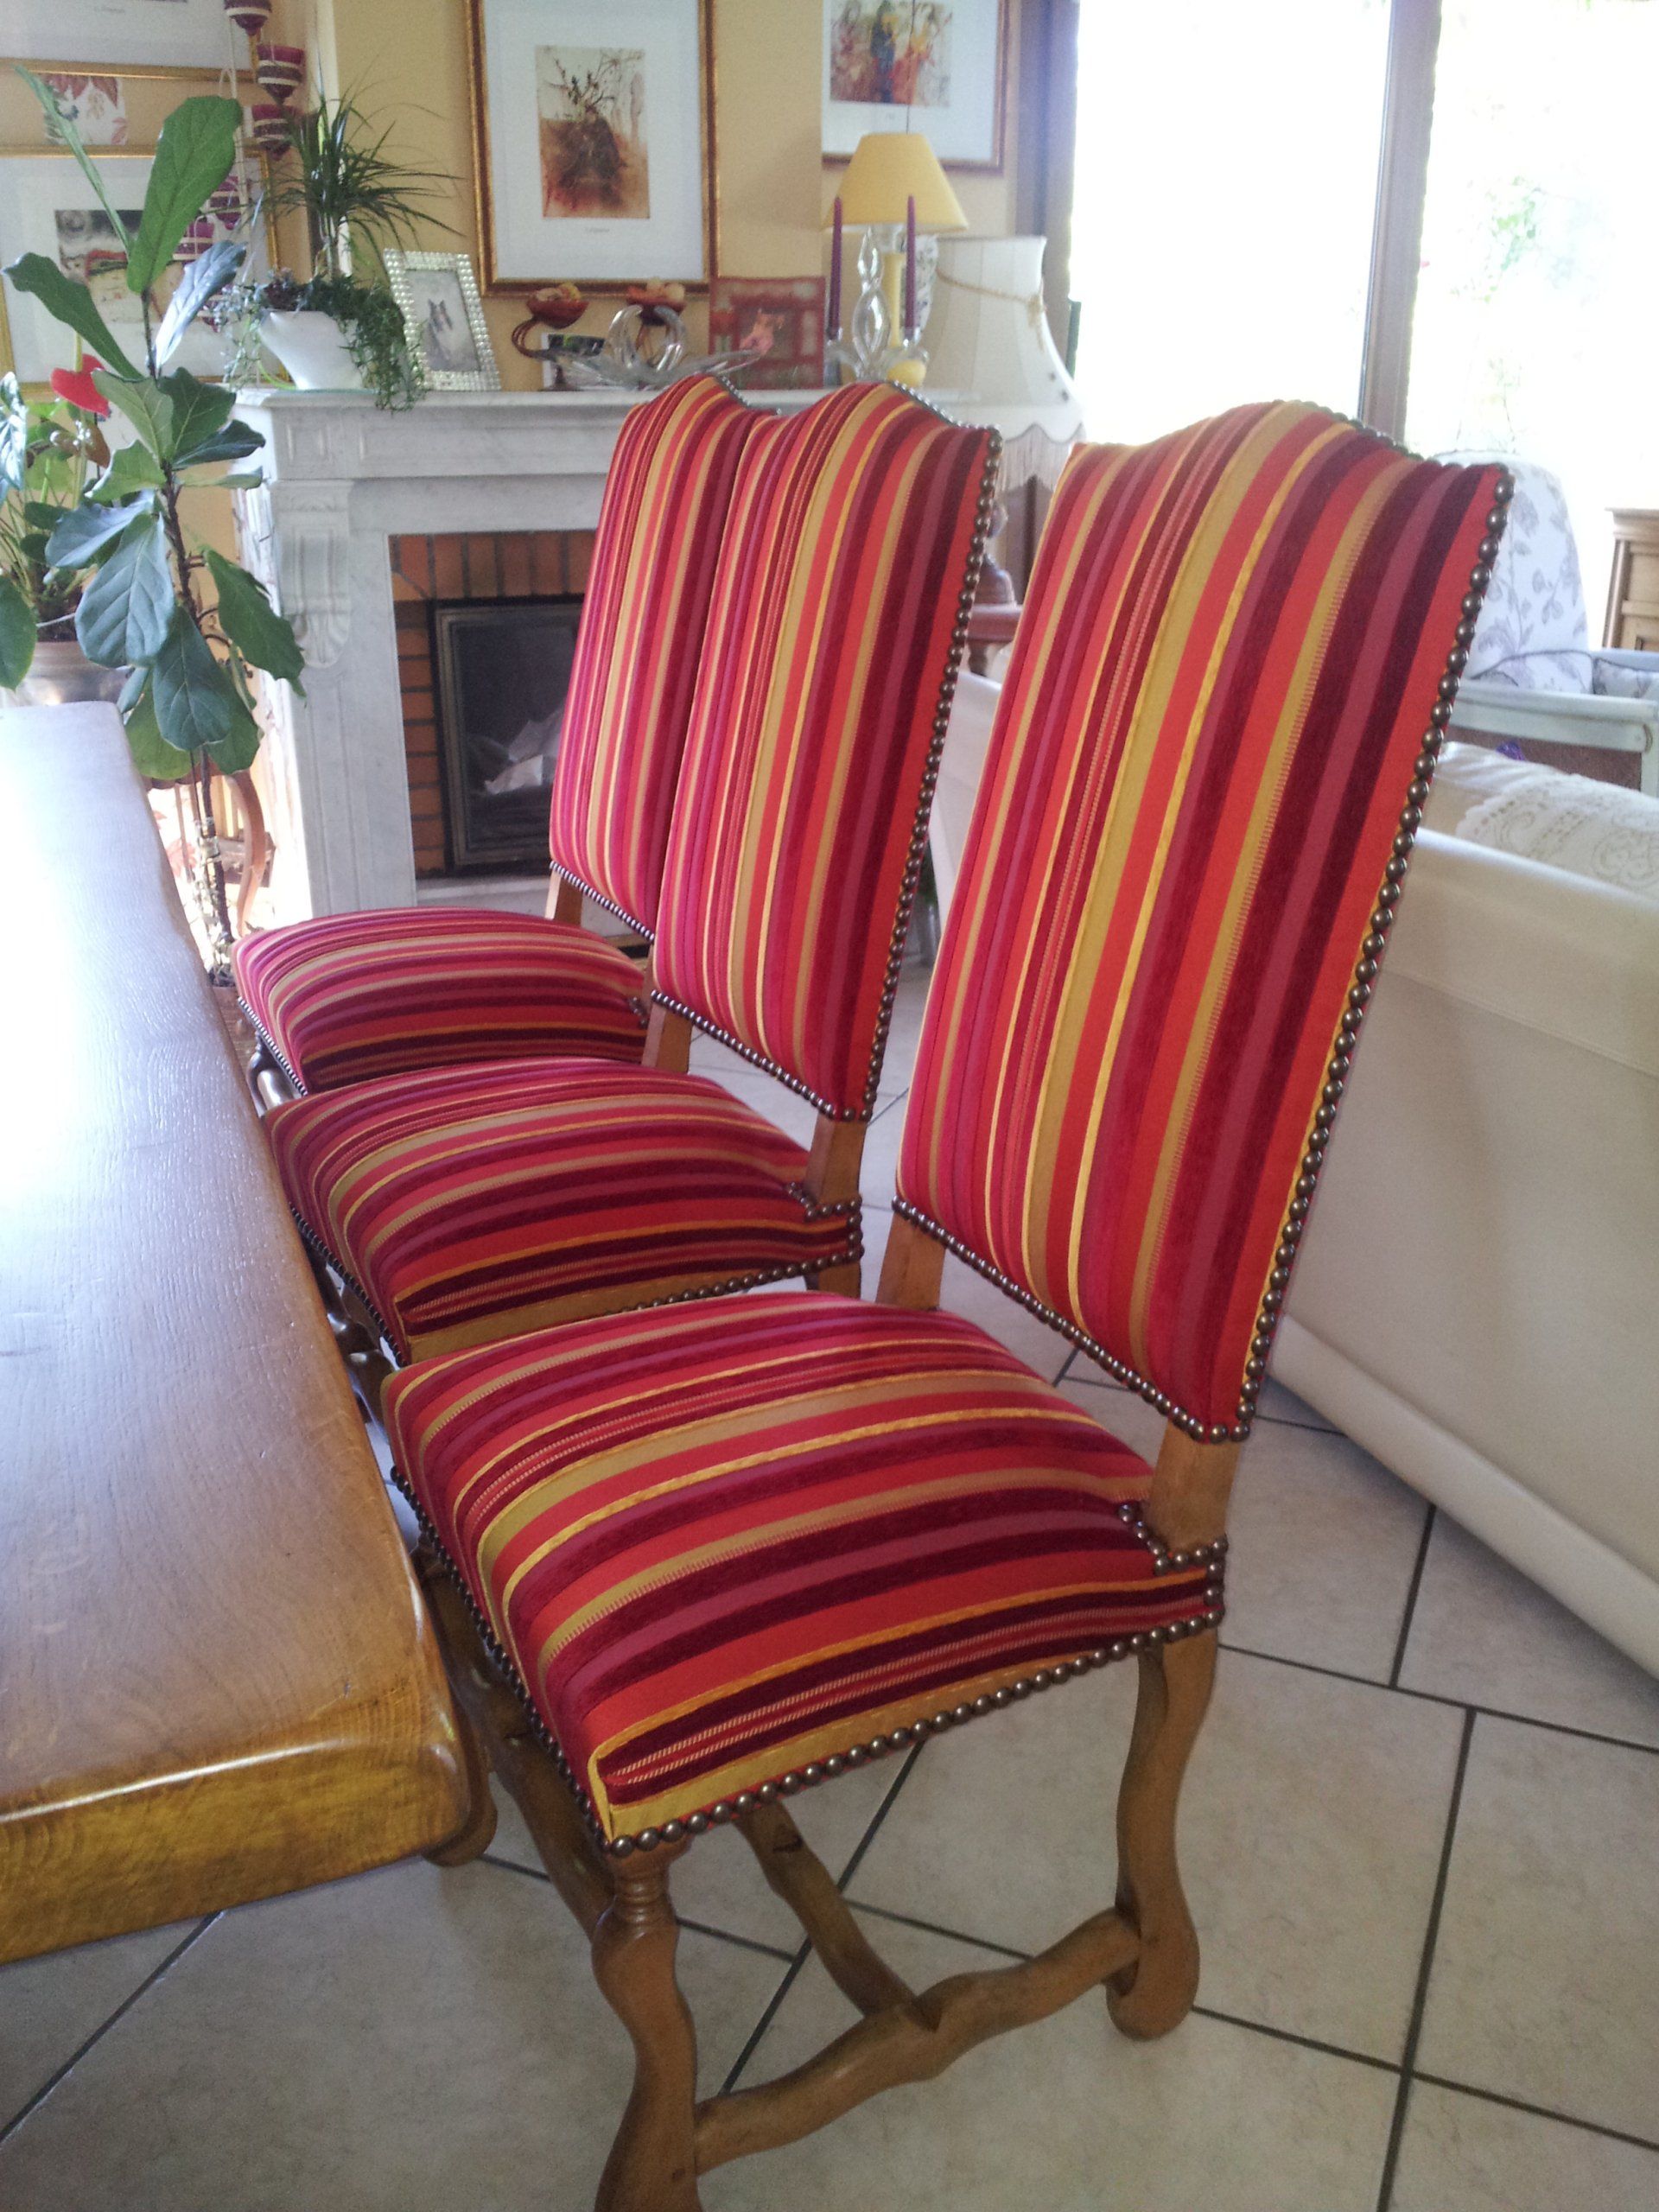 Trois chaises anciennes rayées roses